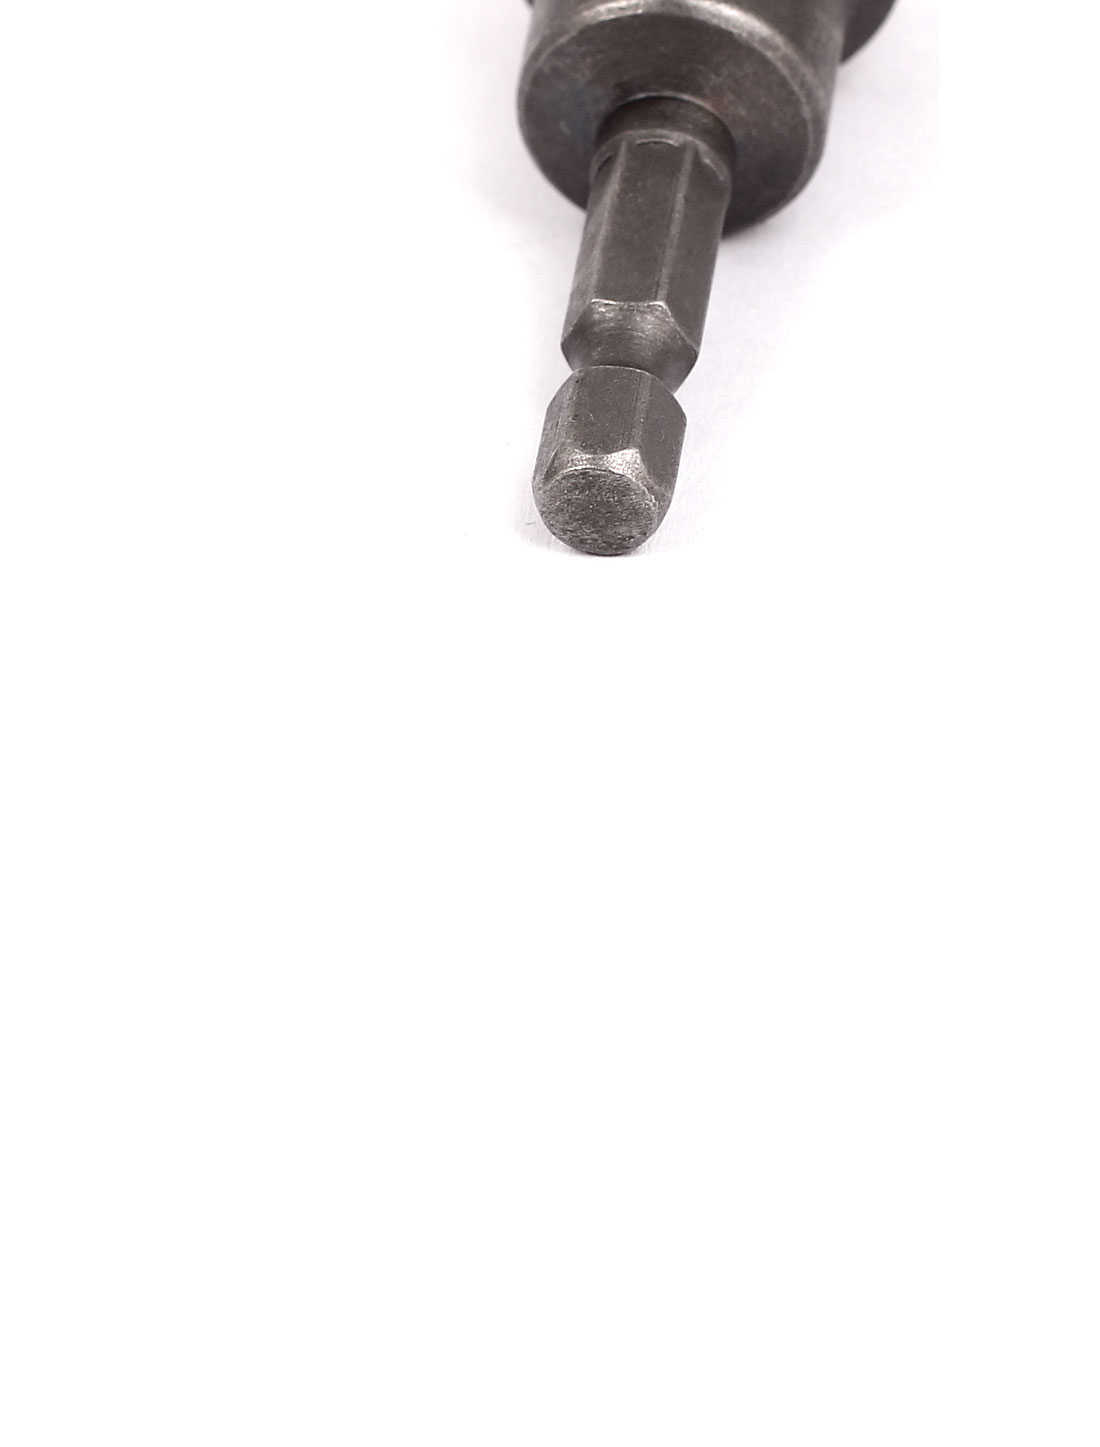 Unique Bargains 1/4' Shank 15mm Hex Socket Impact Nut Setter Driver Bit Adapter Silver Gray 5pcs